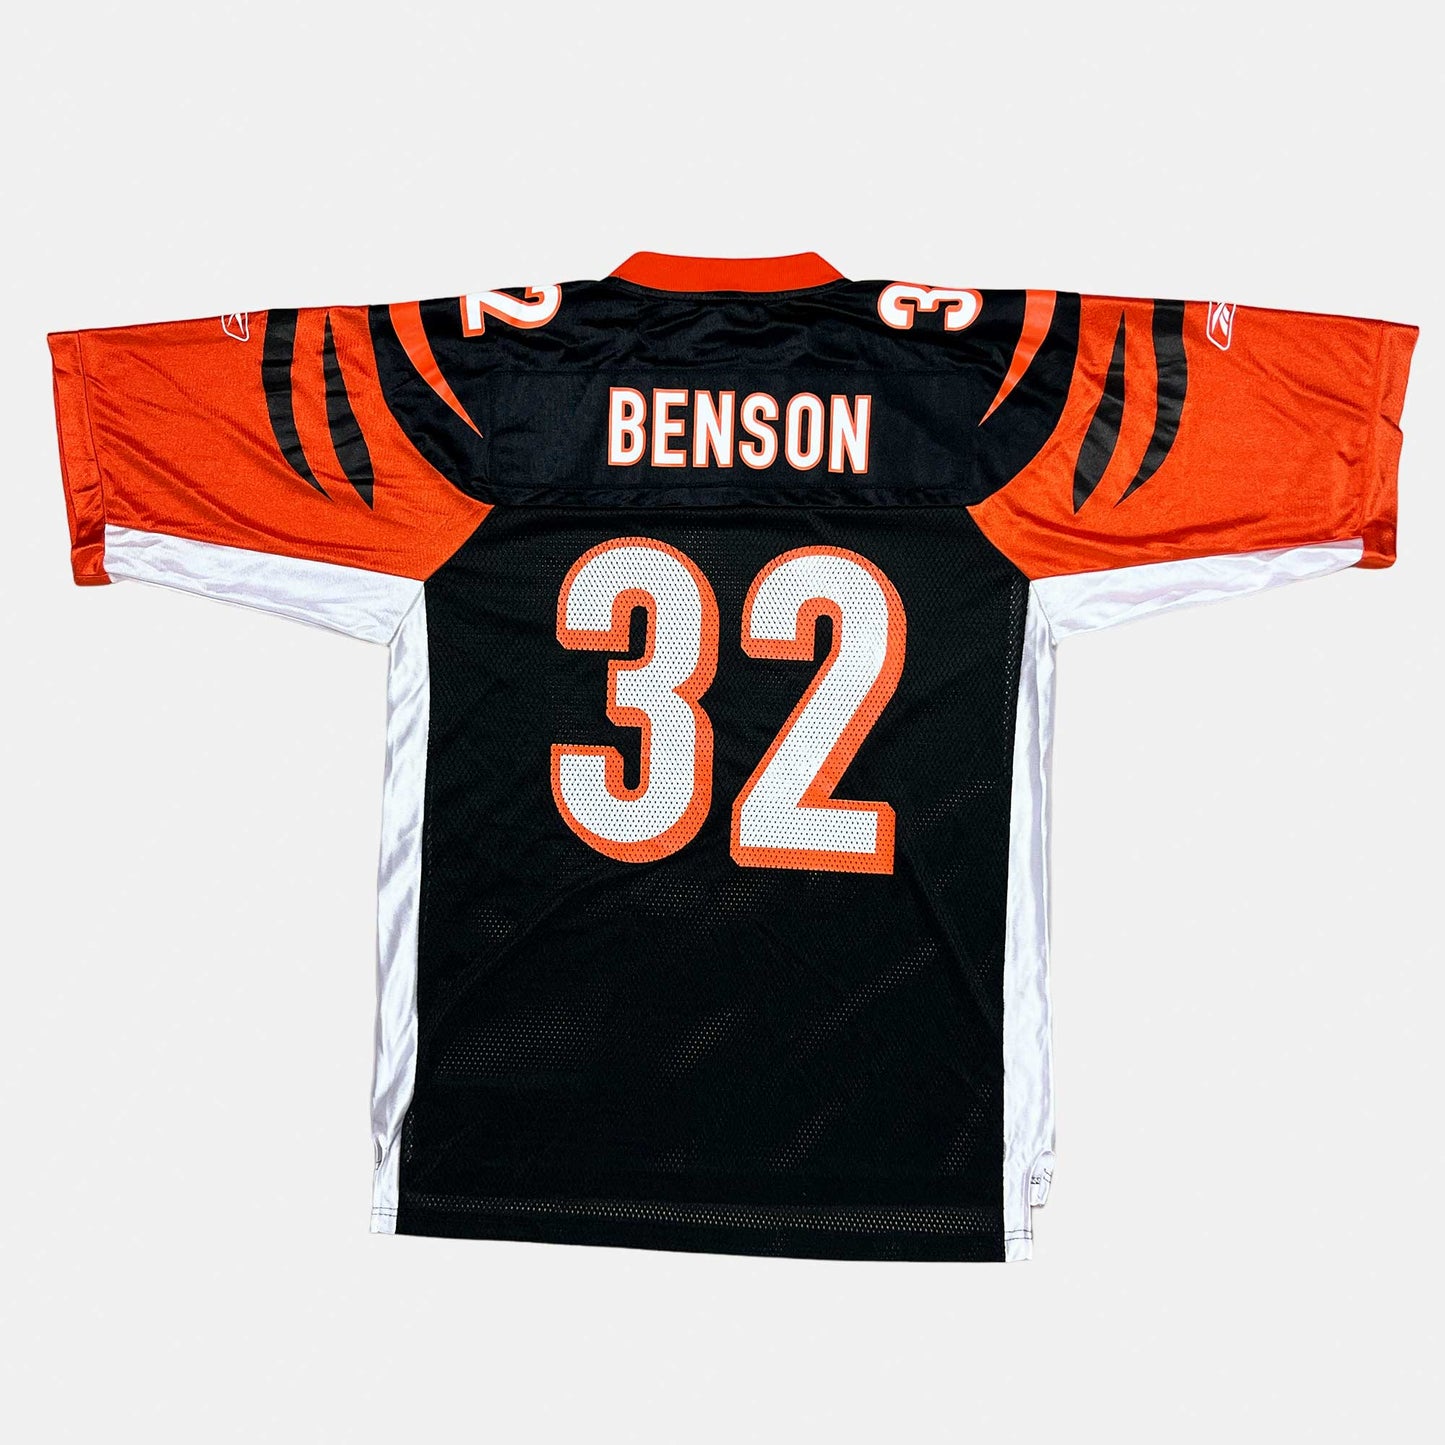 Cincinnati Bengals - Cedric Benson - Größe M - Reebok - NFL Trikot